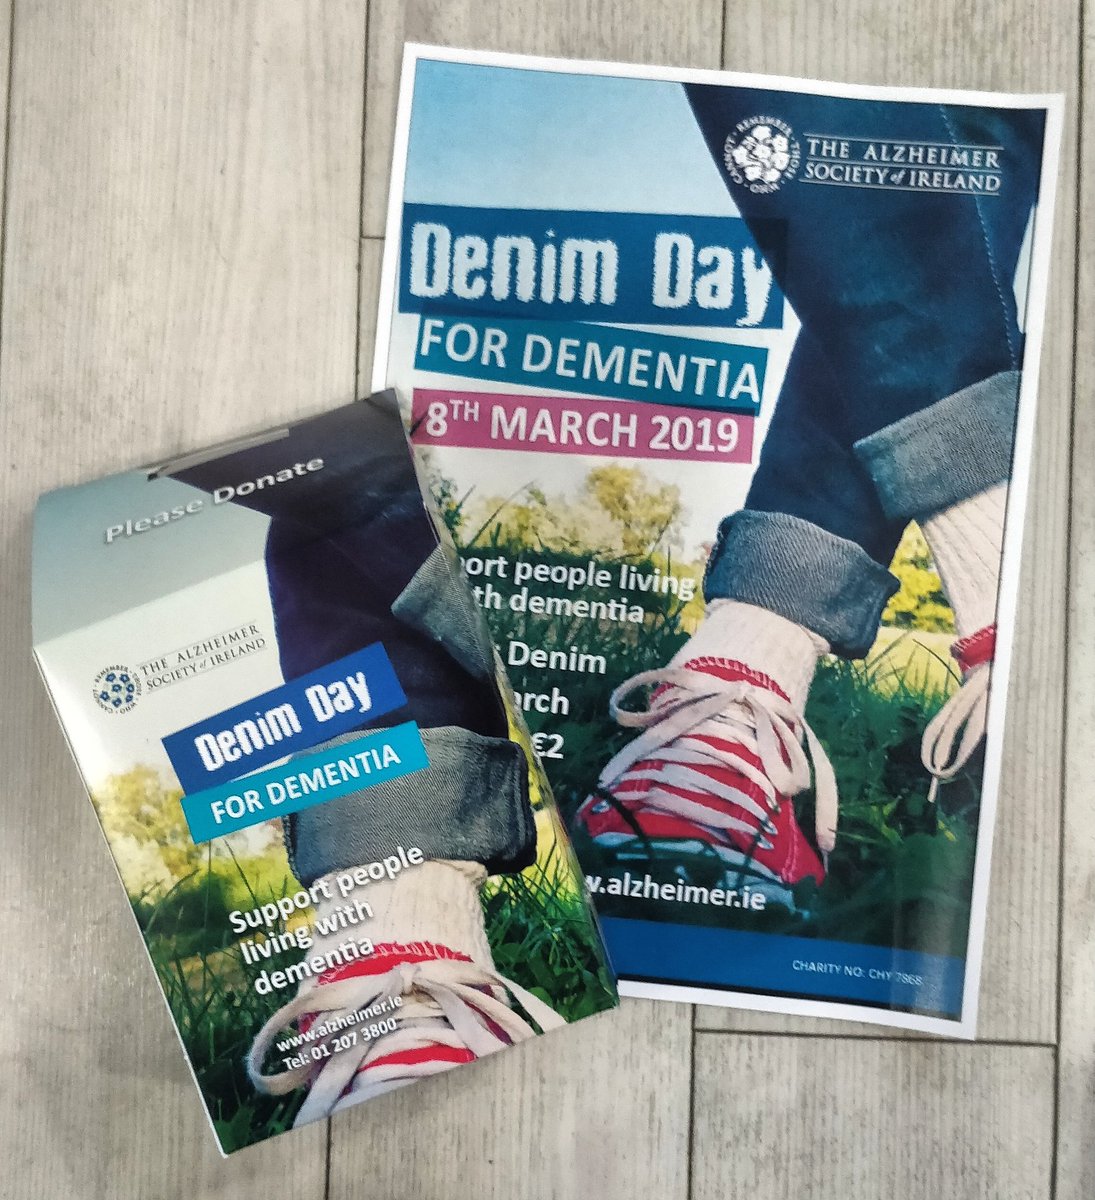 Denim day today 💙👖@alzheimersocirl @louisecooney_ #poyntonspinecare #denimday #alzheimers #alzheimersawareness #alzheimerssociety #denimday #denimday4dementia #fundraiser #health #dementia #charity